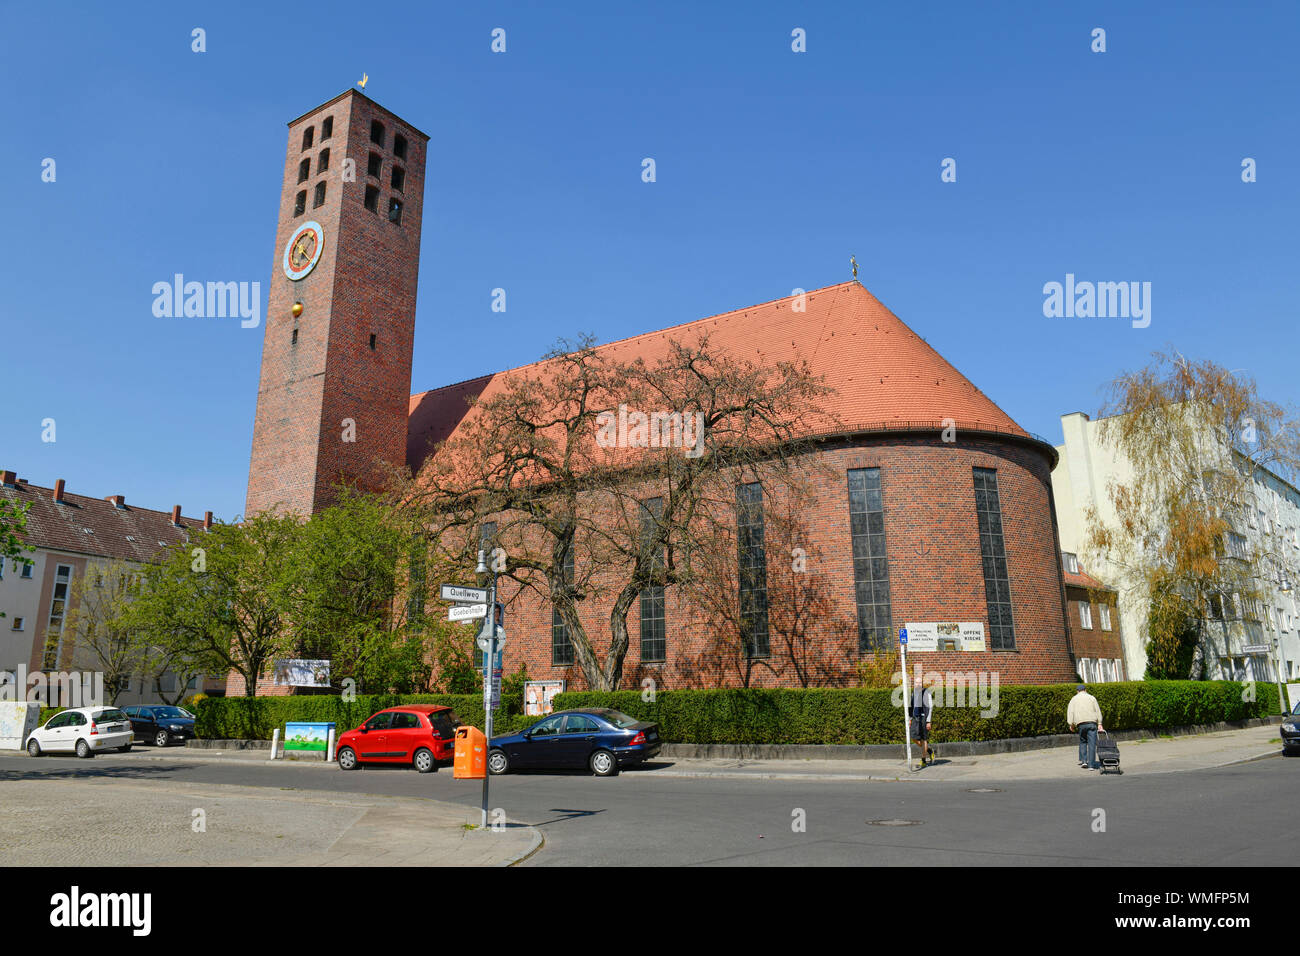 Katholische St.-Joseph-Kirche Grosssiedlung, Quellweg, Siemensstadt, Spandau, Berlin, Deutschland Banque D'Images